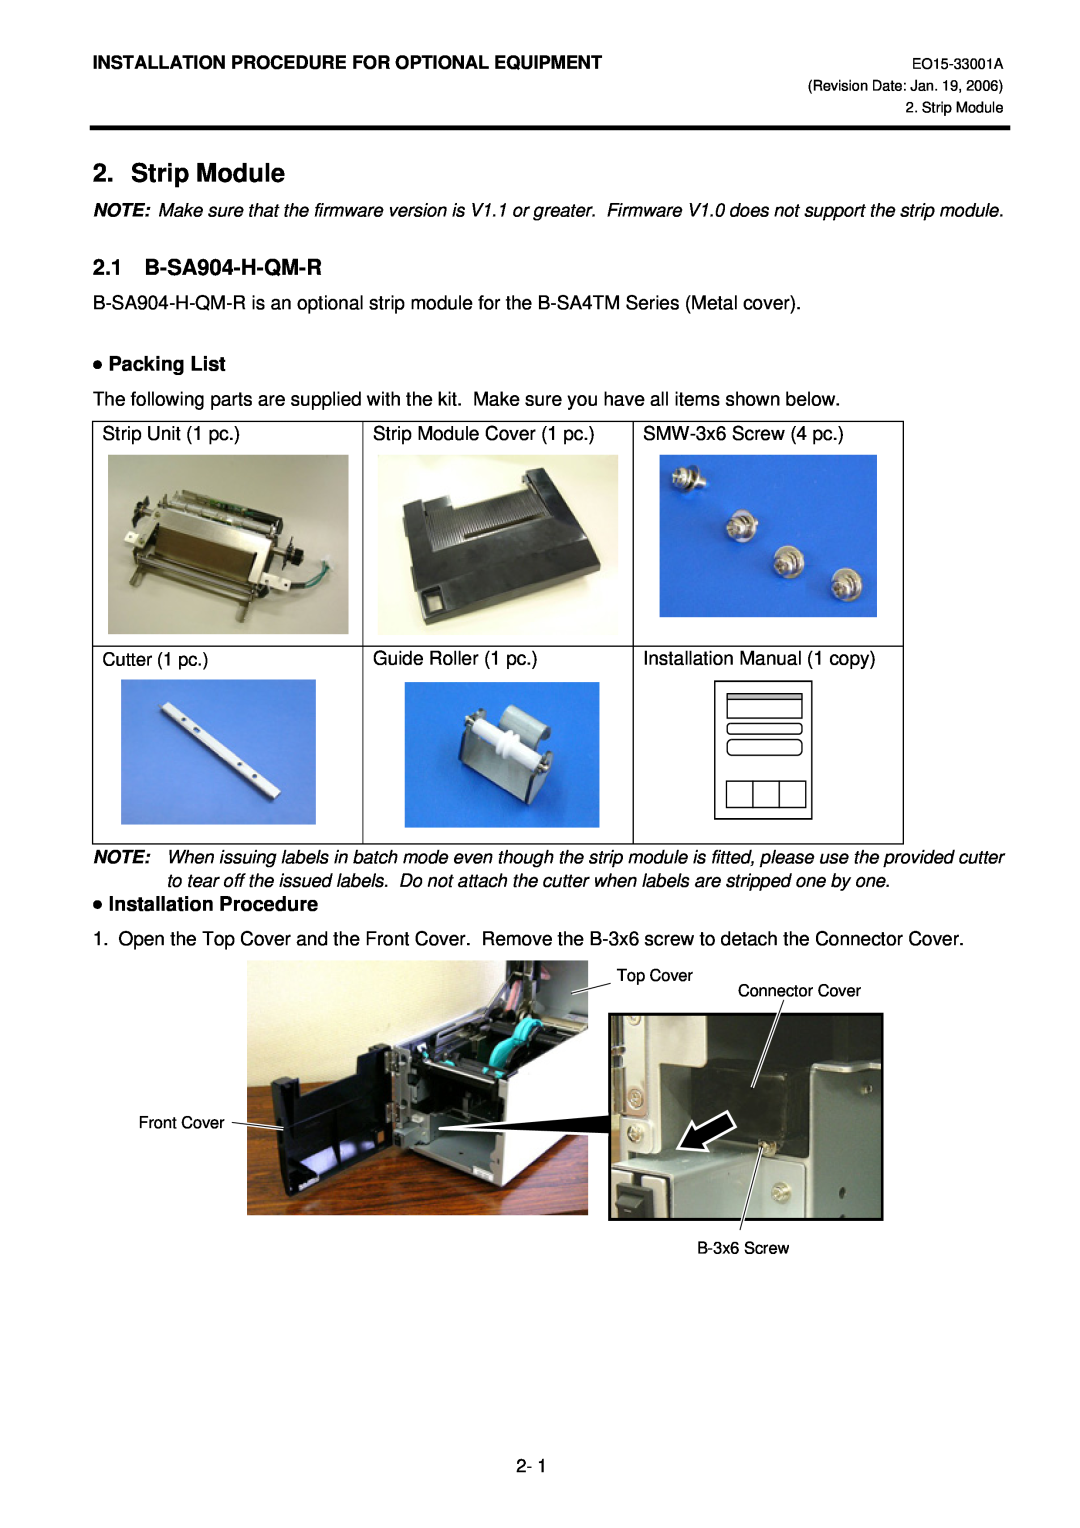 Toshiba B-SA4T installation manual Strip Module, B-SA904-H-QM-R, Packing List, Installation Procedure 